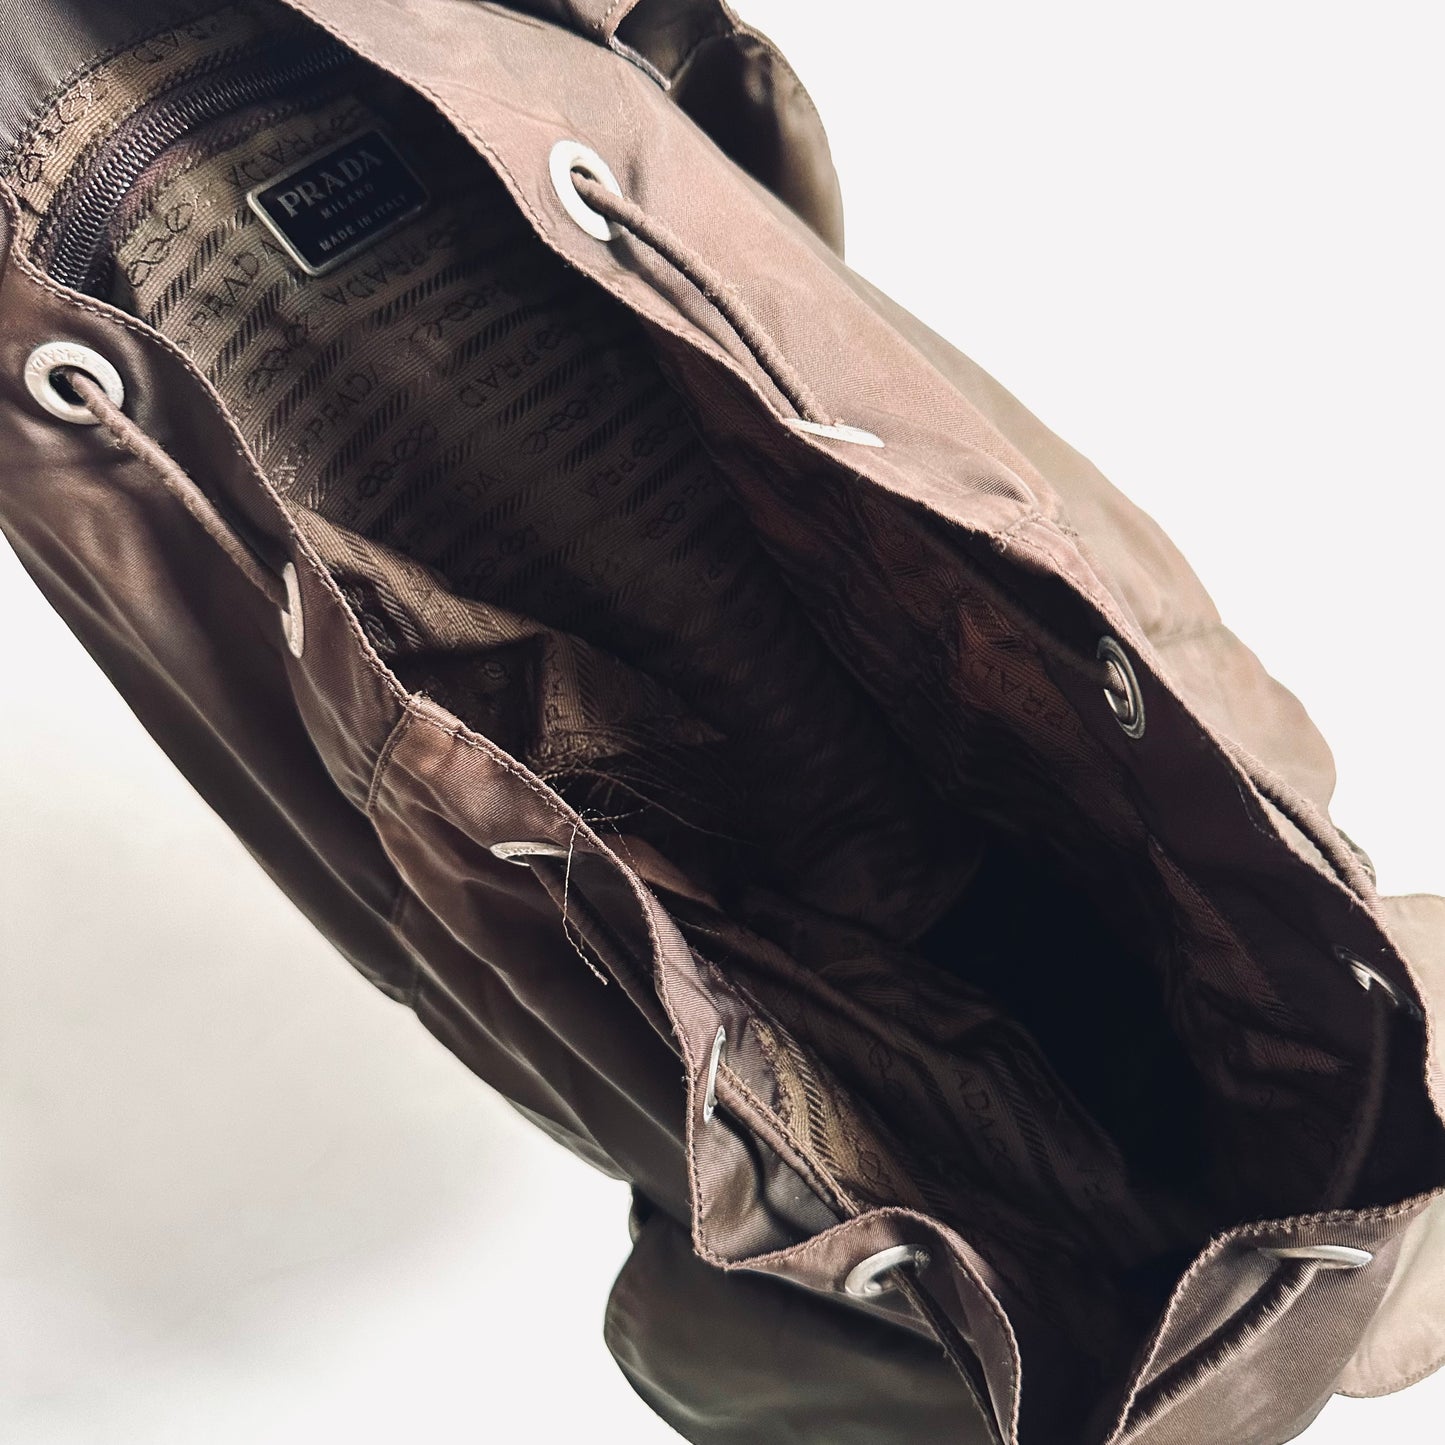 Prada Ebano Khaki Vela Classic Logo Nylon & Leather Backpack Drawstring Bag